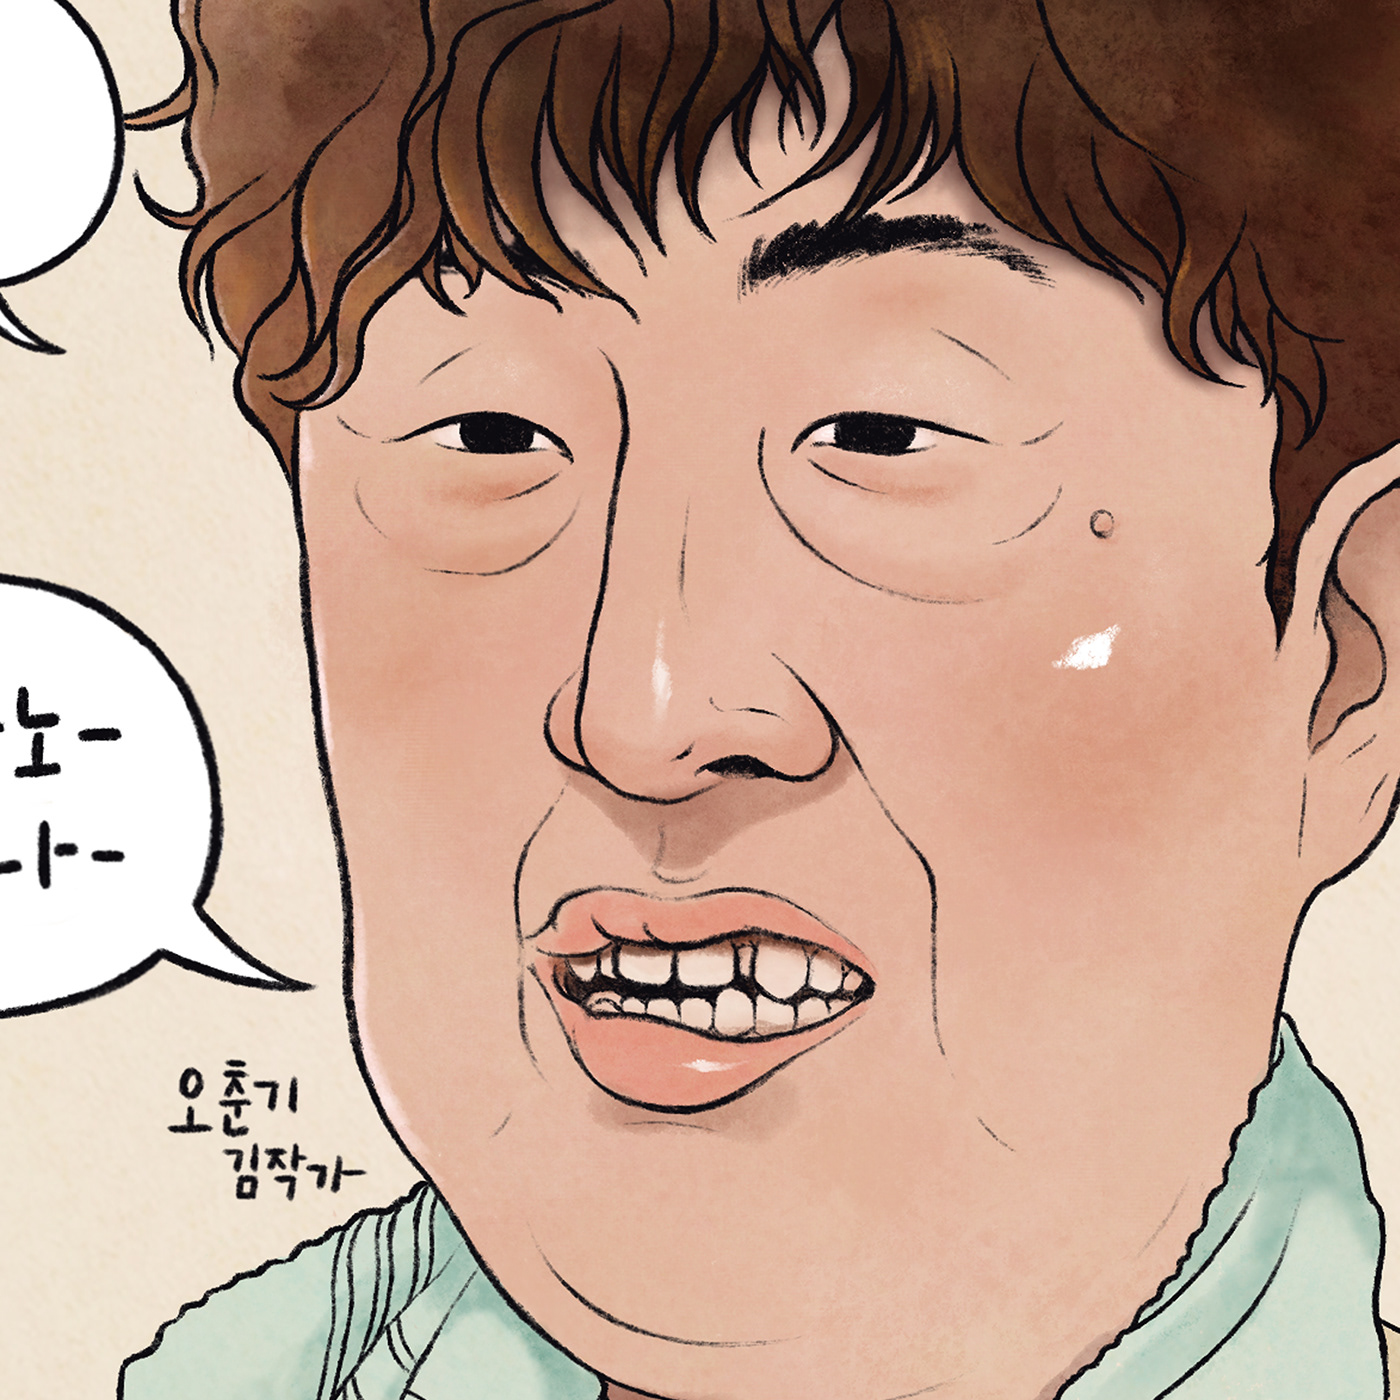 actor artwork caricatures fanart human face illustrations k-drama moviestar portrait